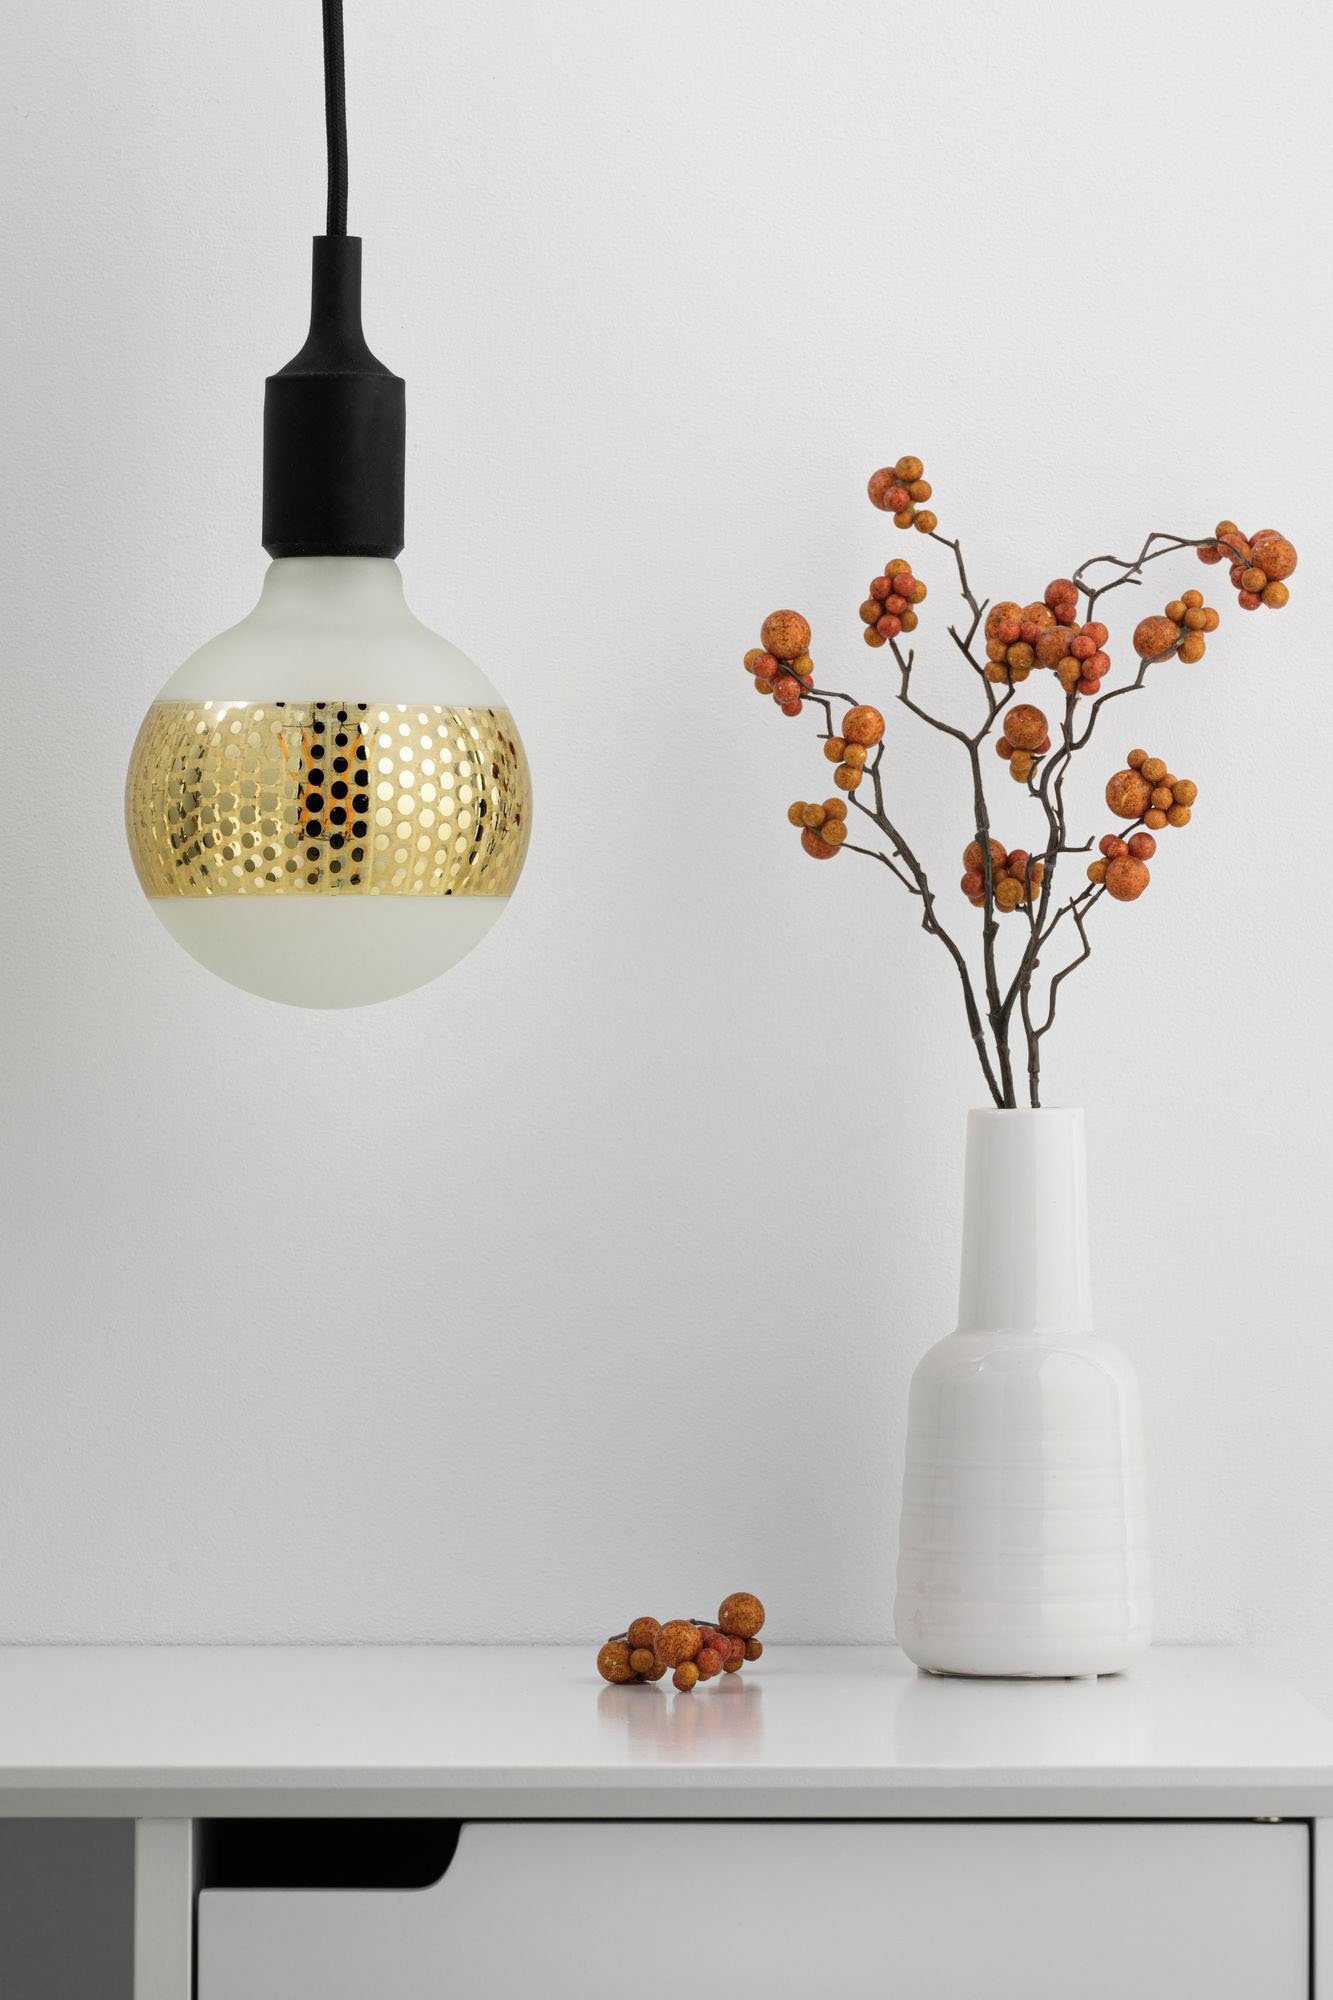 Paulmann LED-Leuchtmittel Globe goldfarben 1 Warmweiß Ringspiegel gepunktet, 125mm E27, St